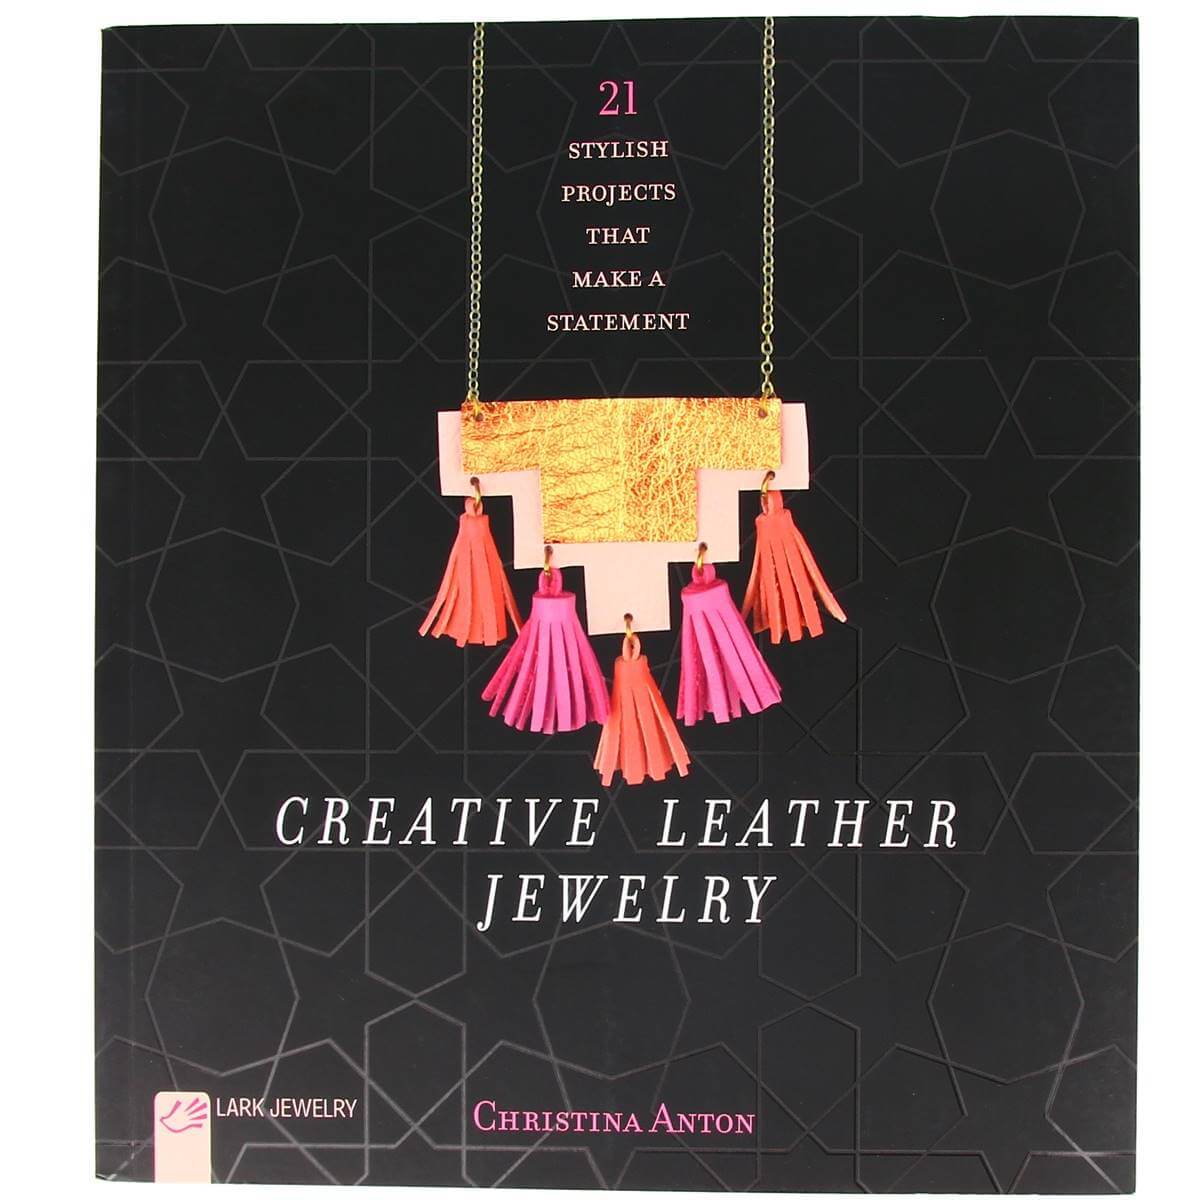 Livre "CREATIVE LEATHER JEWELRY" -  Bijoux créatifs en cuir